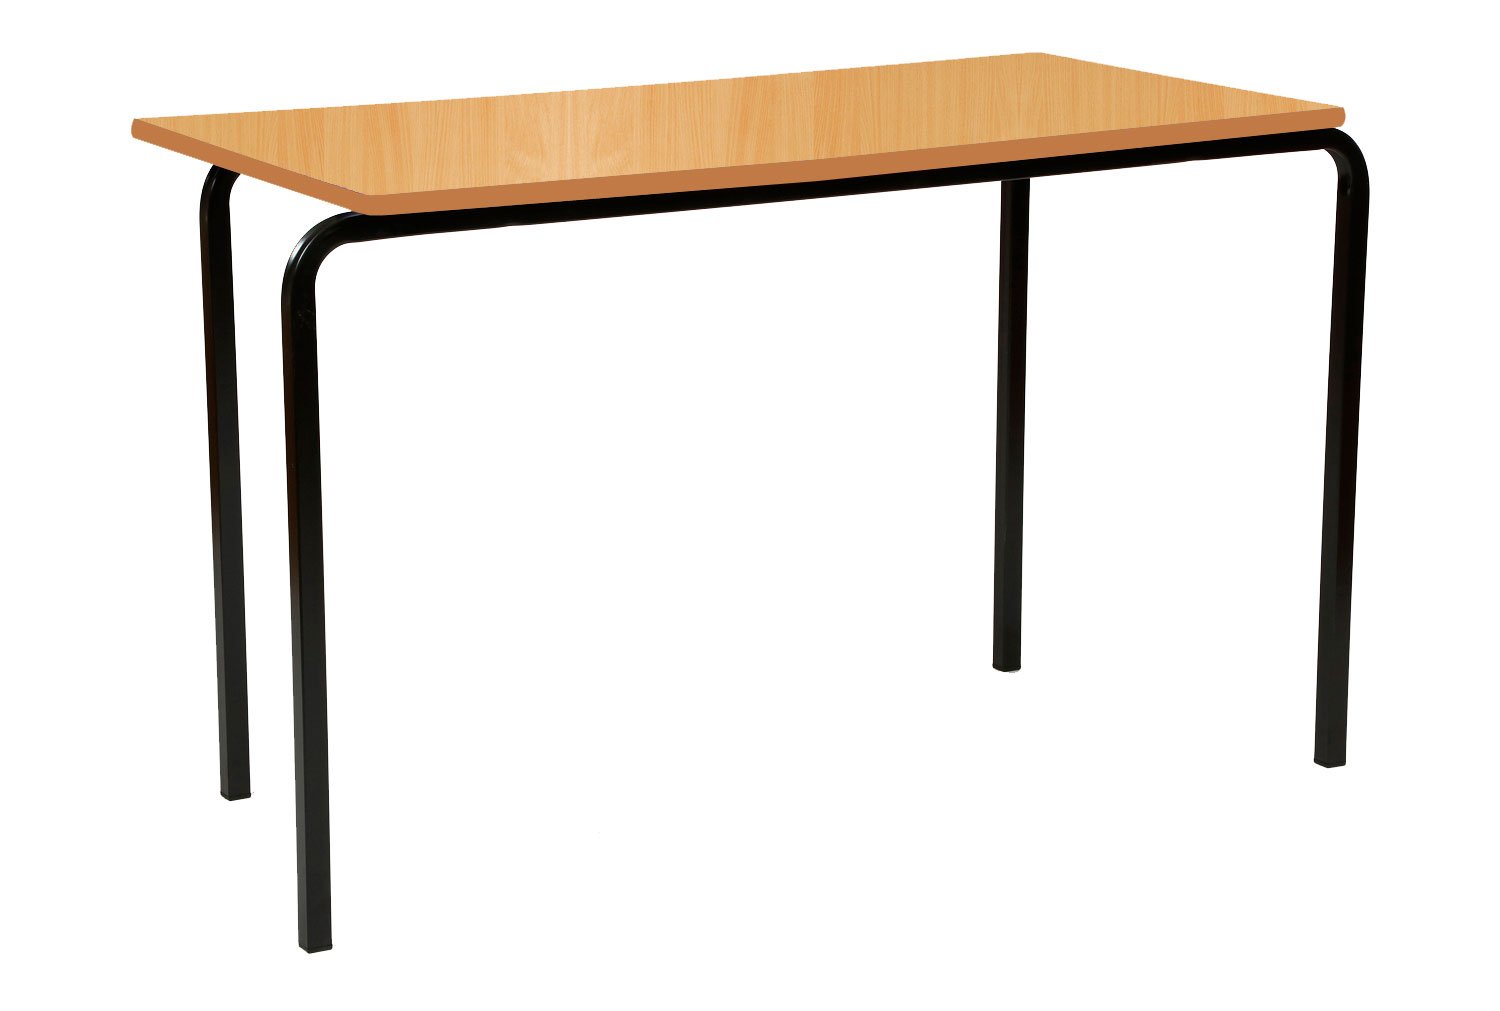 Qty 6 - Educate Crush Bent Rectangular Classroom Table 11-13 Years (MDF Edge), 120wx60dx71h (cm), Black Frame, Light Grey Top